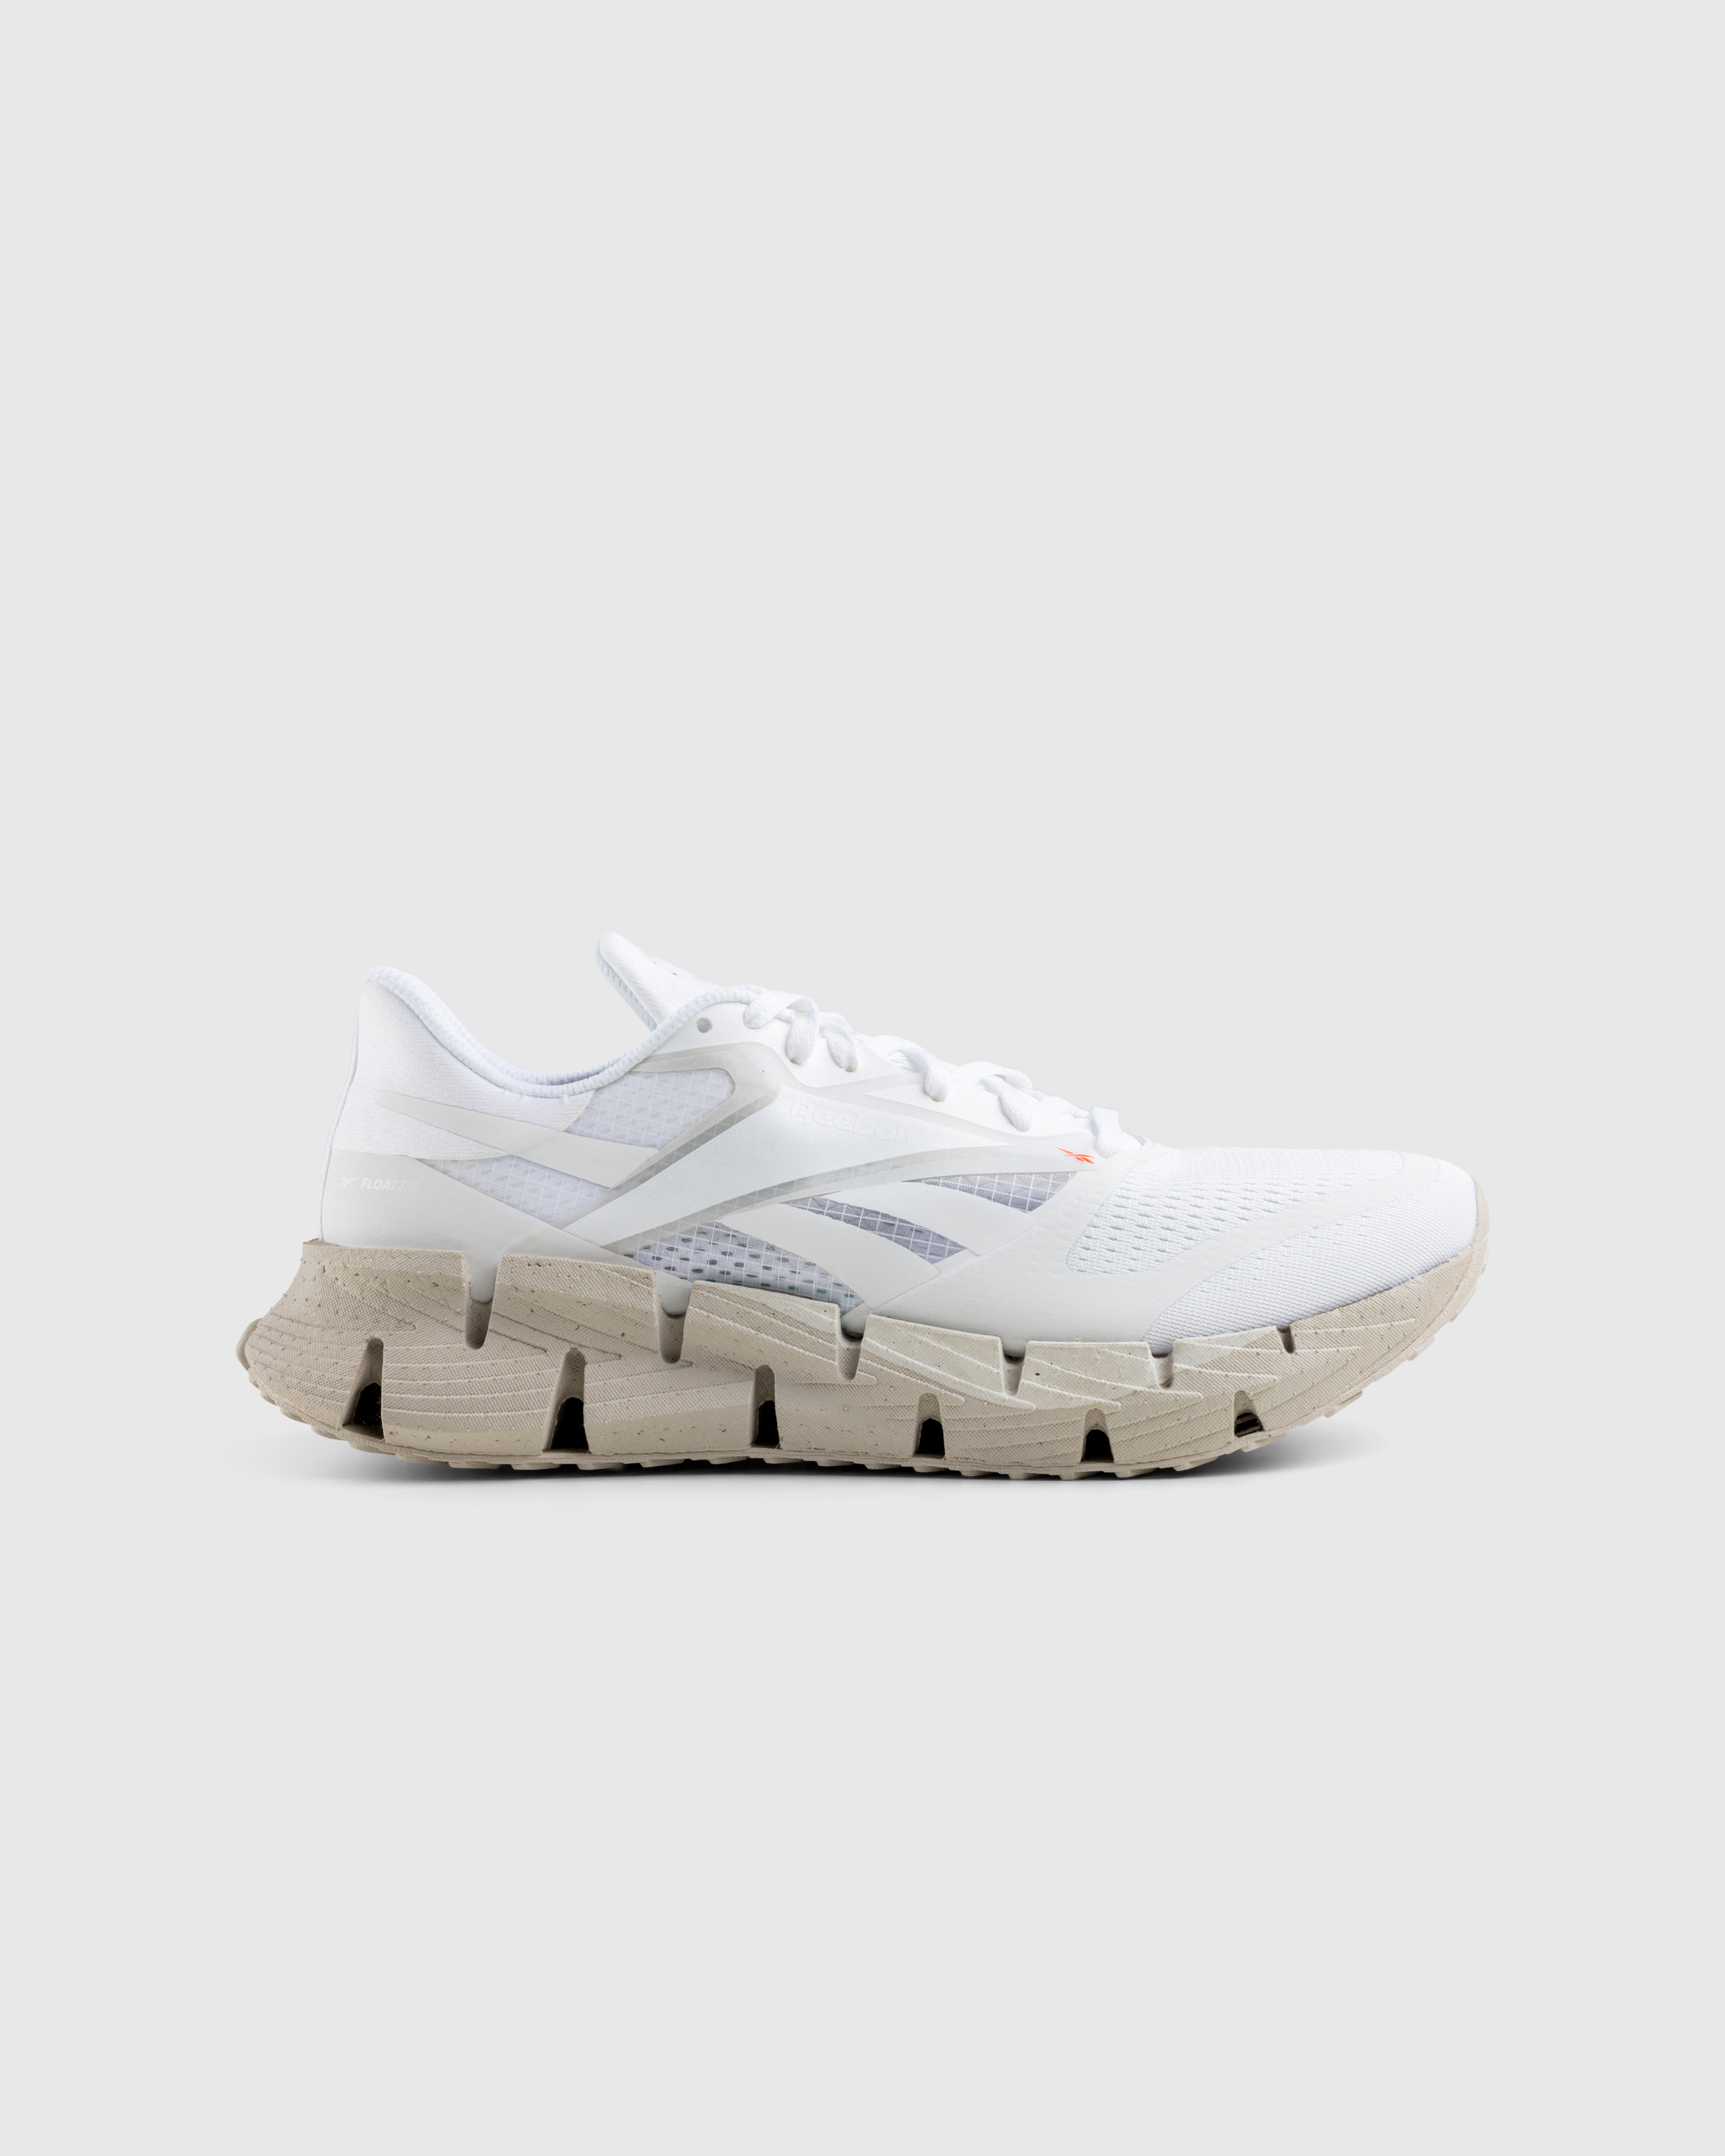 Reebok – FloatZig White - Low Top Sneakers - White - Image 1